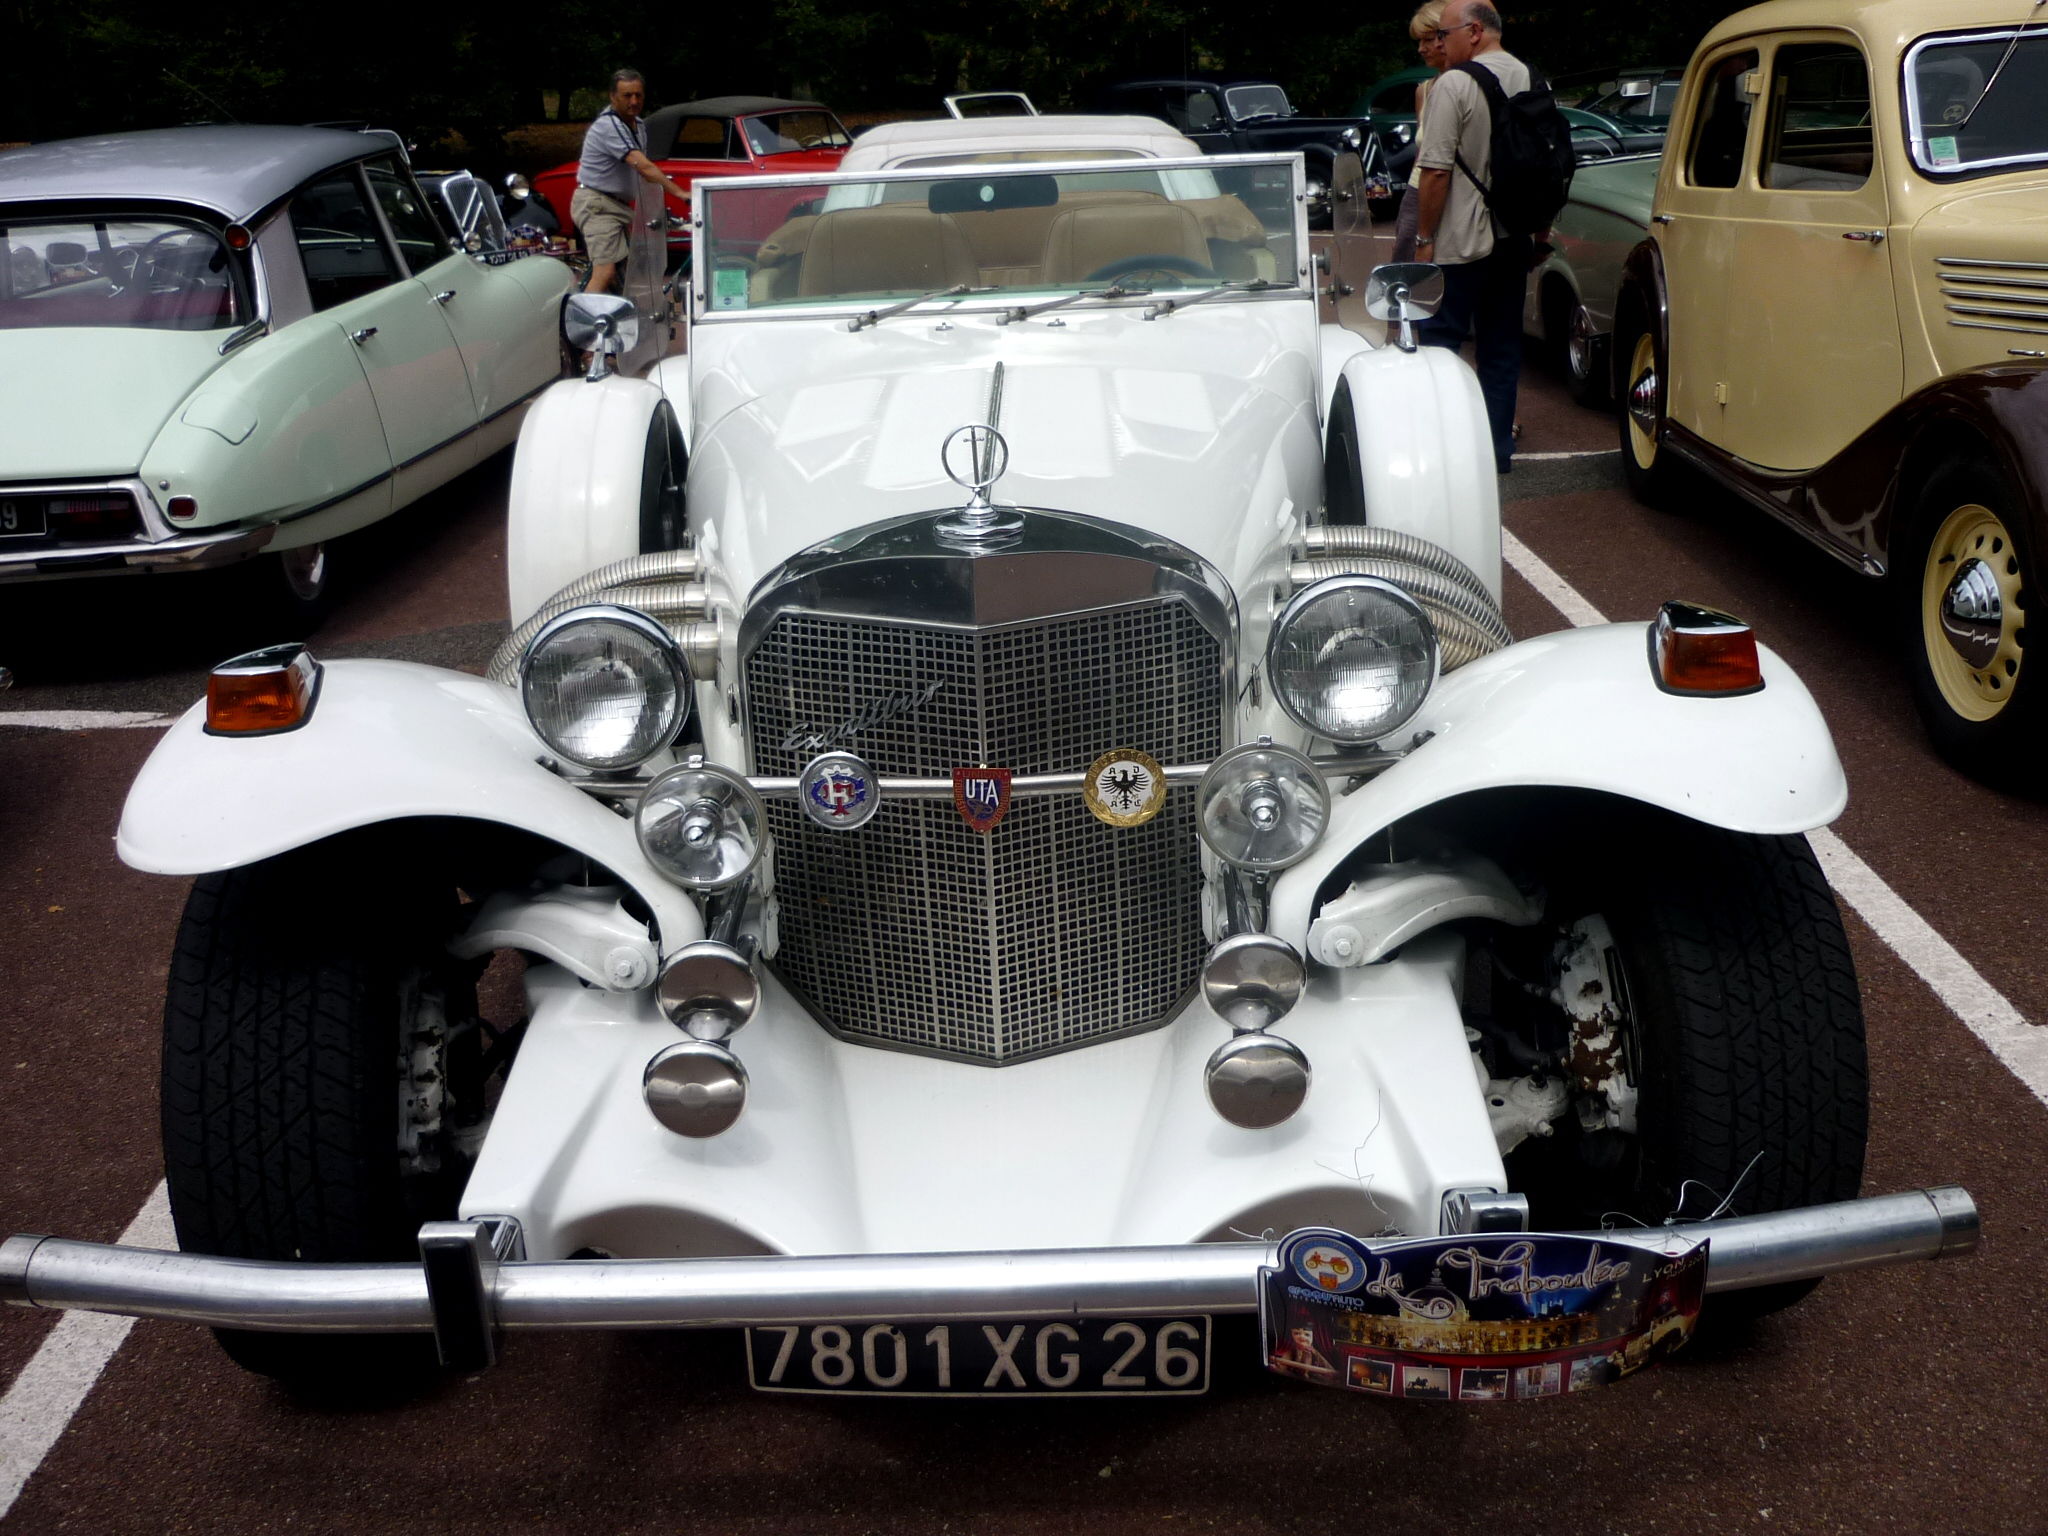 Lyon's Classic and Antique car